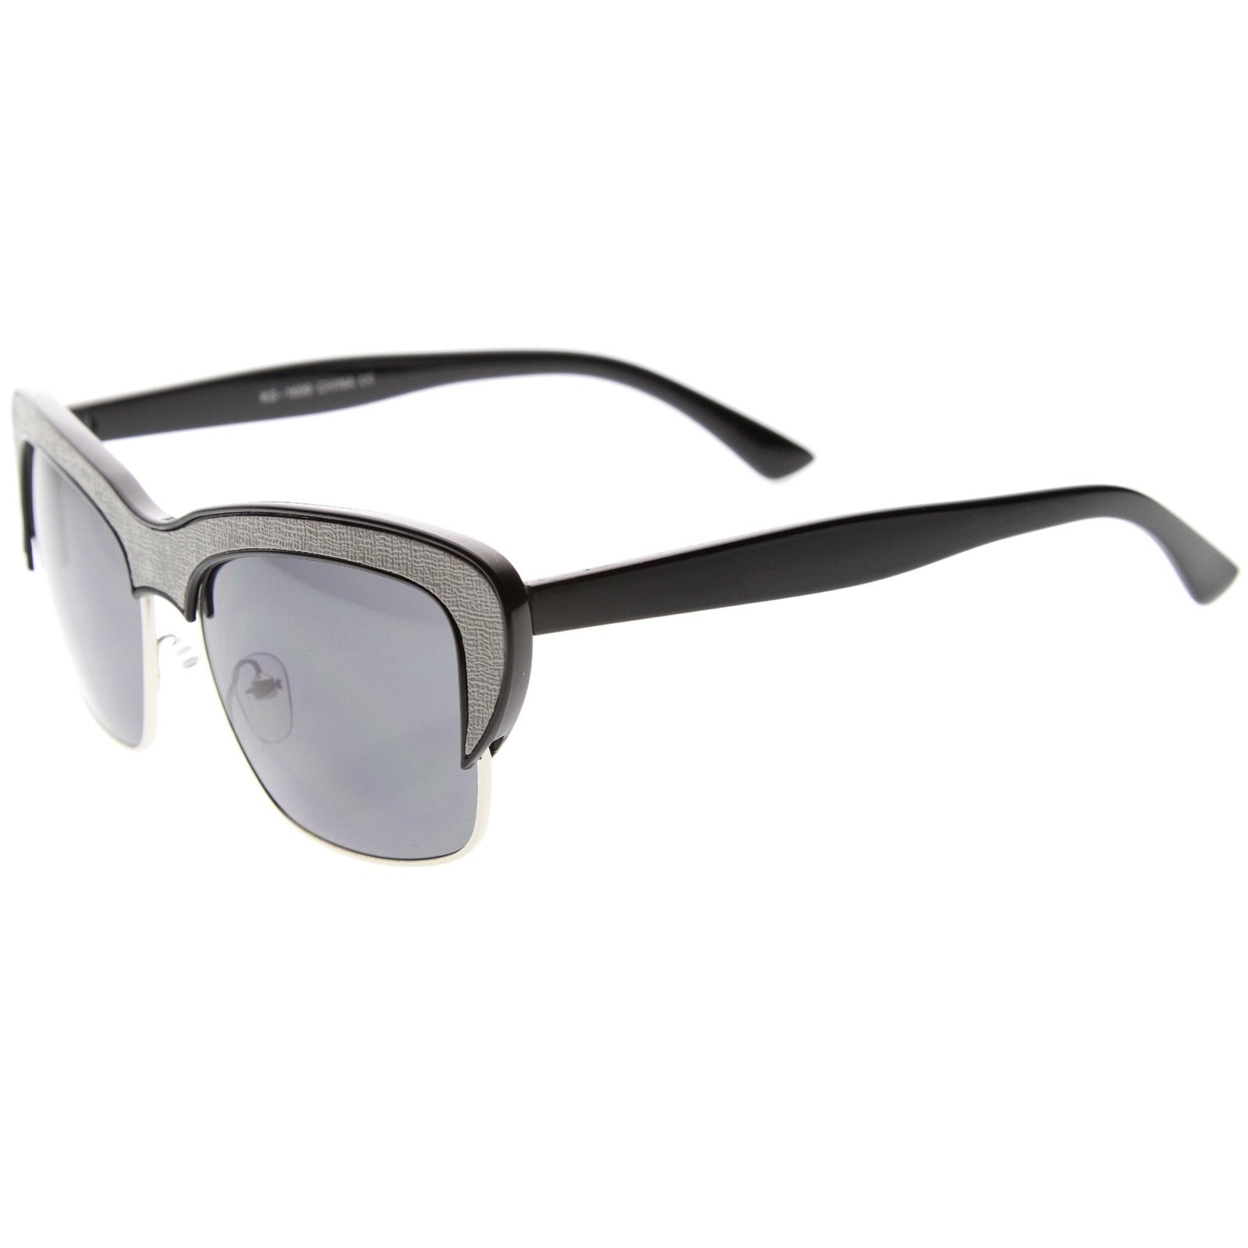 Womens Semi-Rimless Sunglasses With UV400 Protected Composite Lens - Black-Grey / Smoke